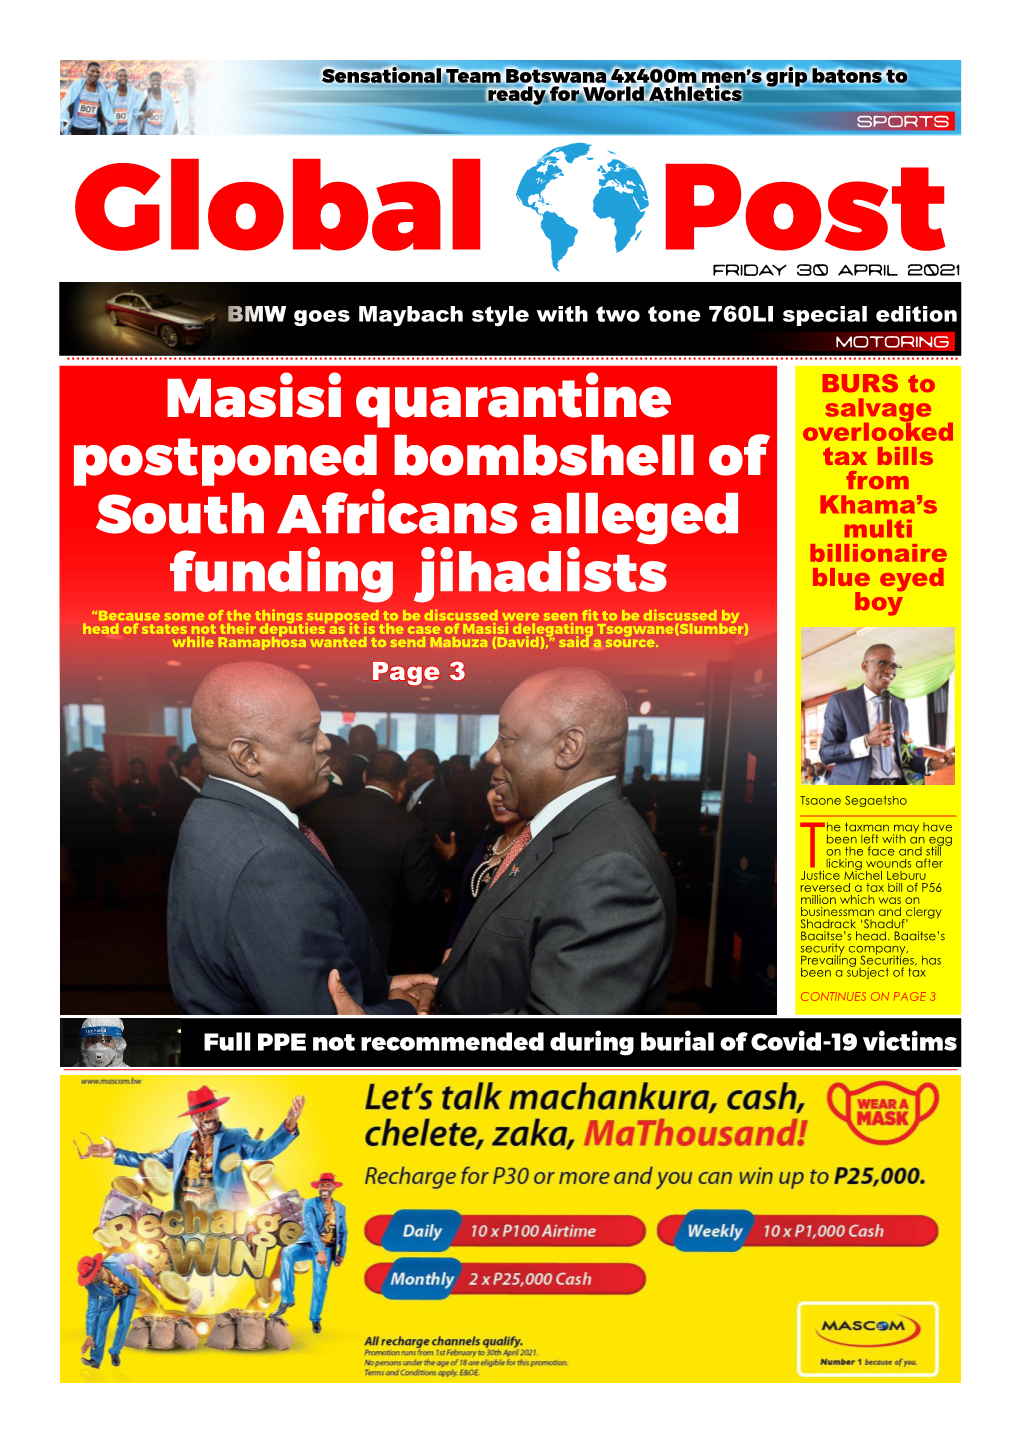 Masisi Quarantine Postponed Bombshell of South Africans Alleged Funding Jihadists